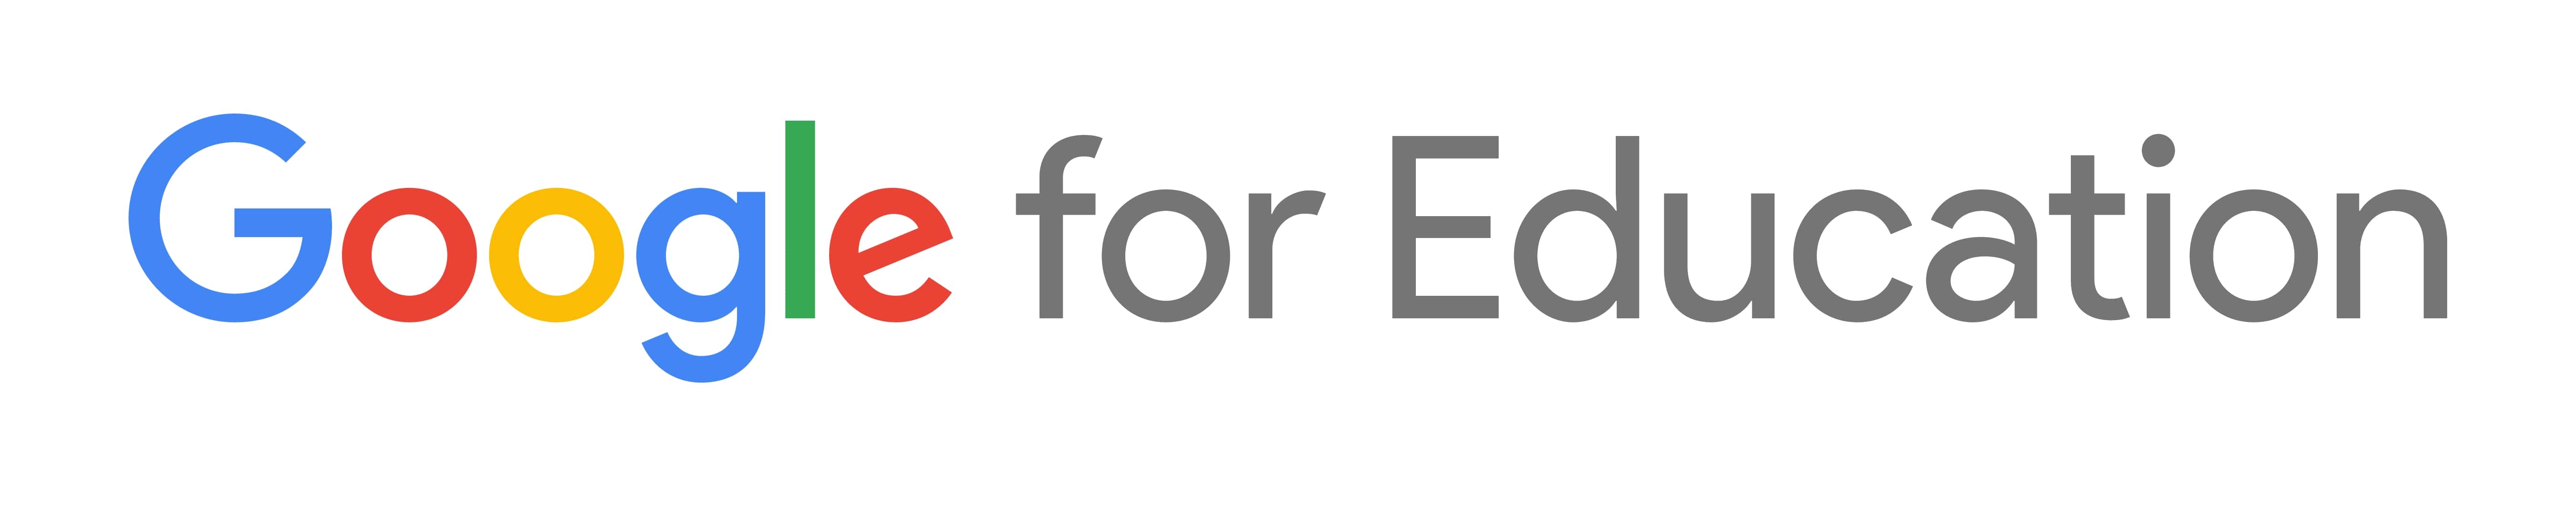 Google-education-logo-V2.jpg